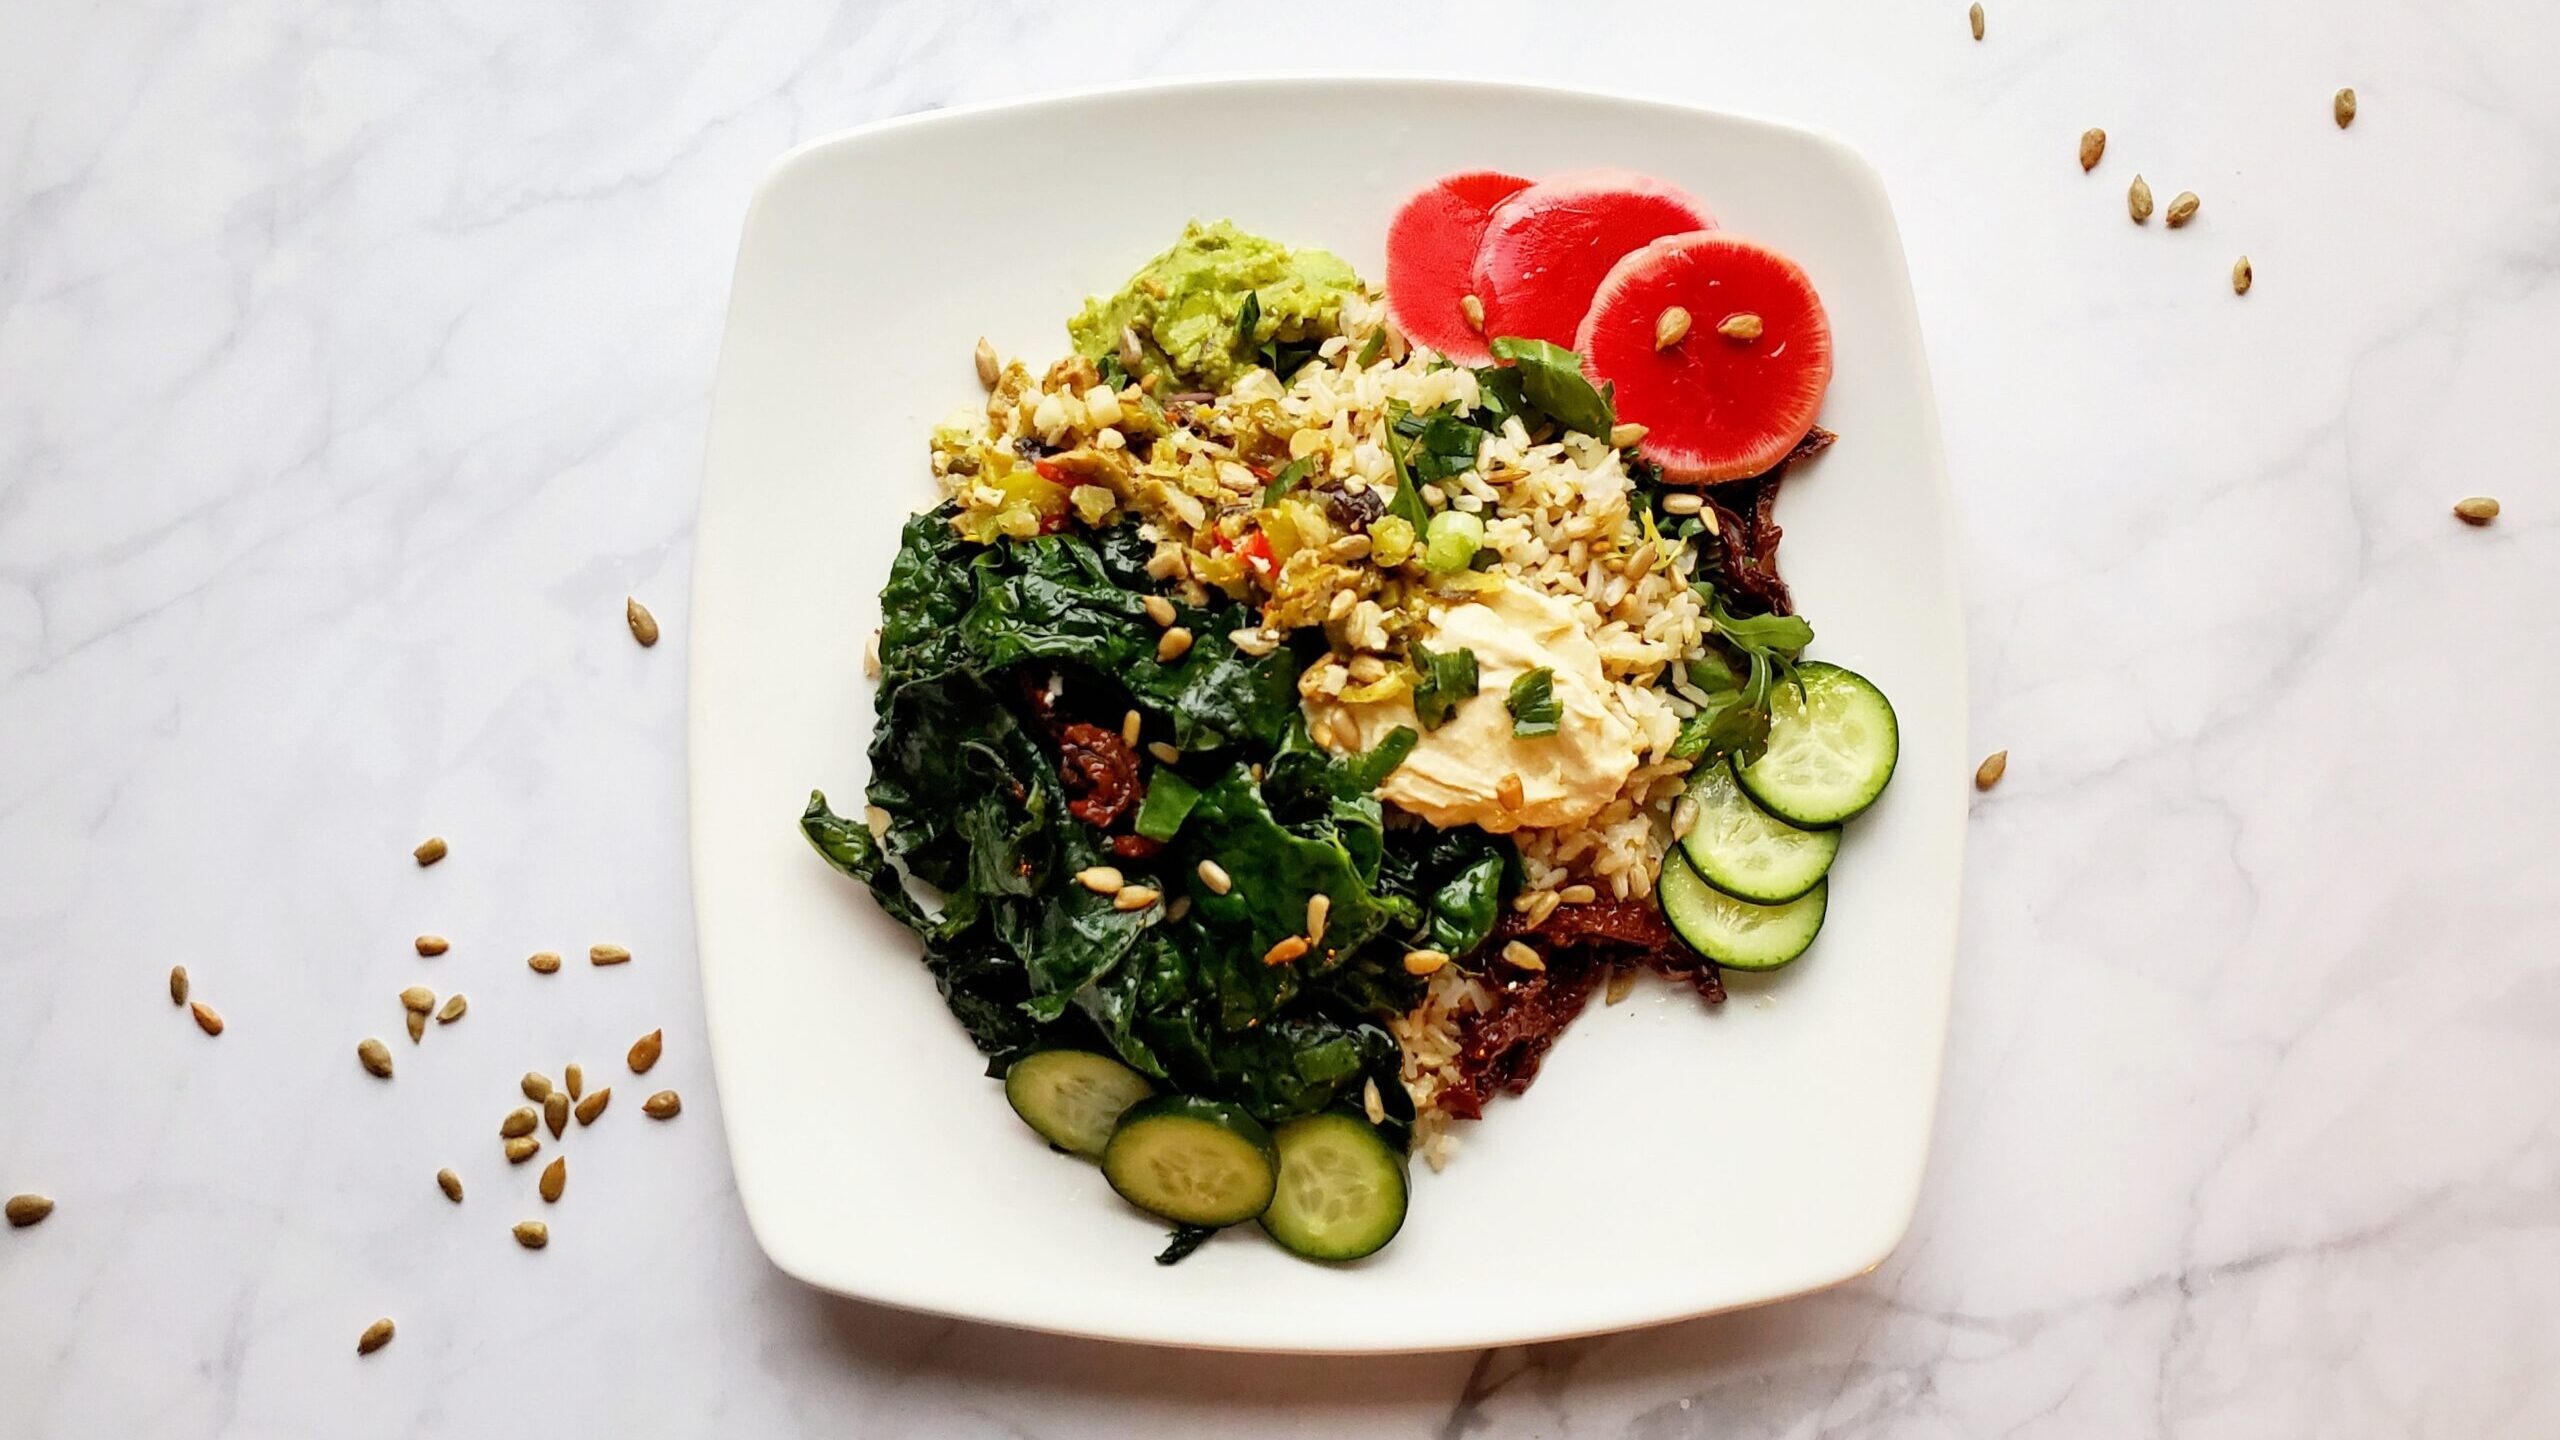 Image for Customer Recipe: Warm Kale & Rice Salad with Veggies